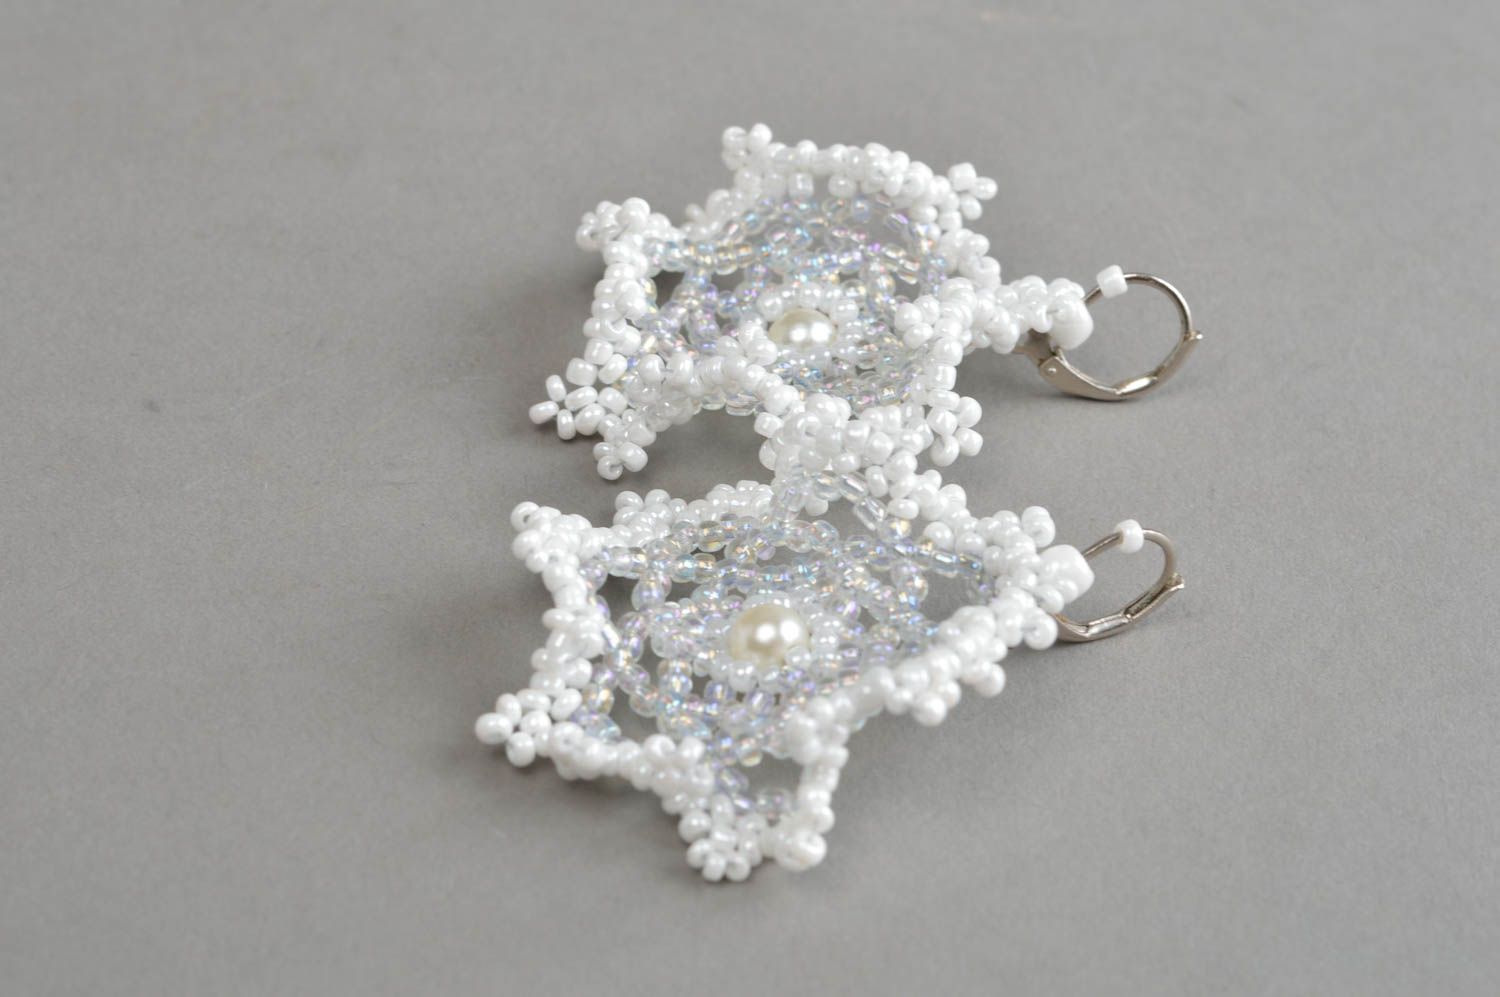 Handmade beaded earrings snowflake earrings fashionable jewelry gift for girl photo 3